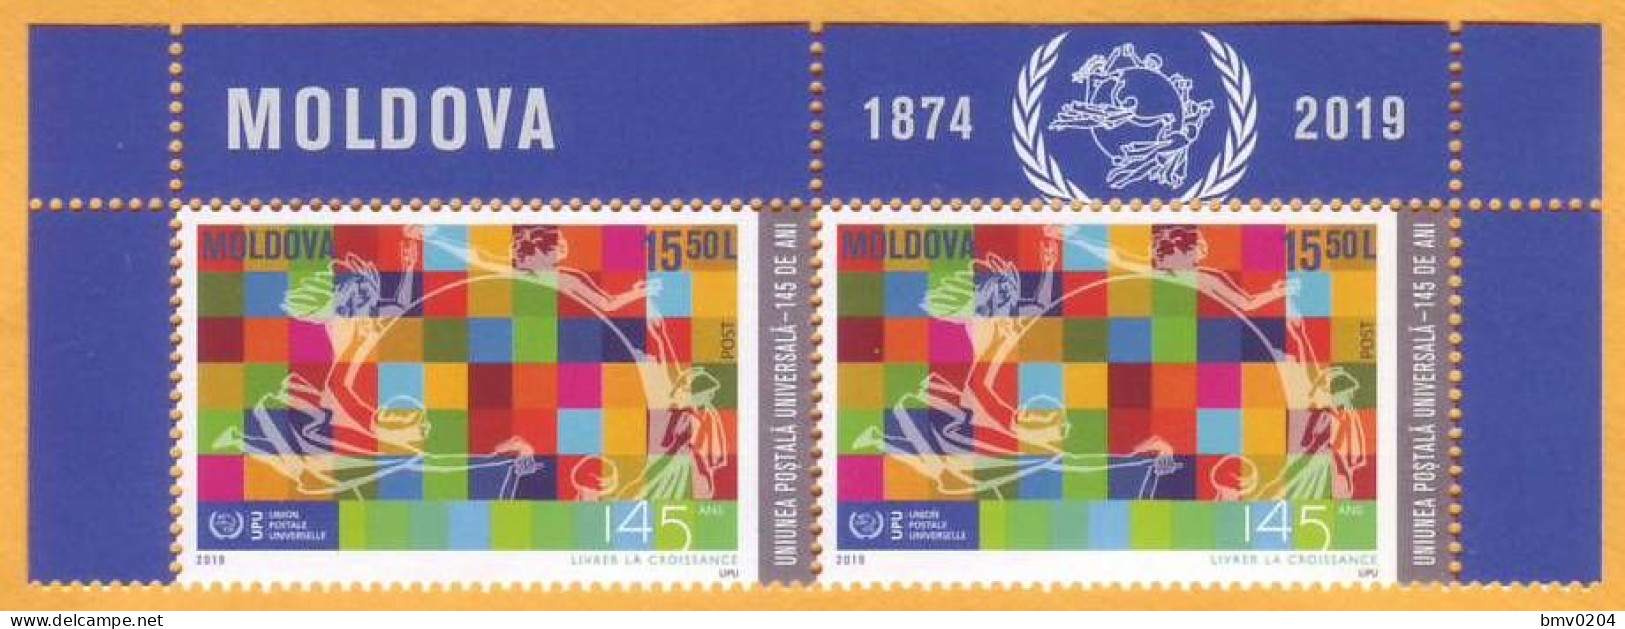 2019 Moldova Moldavie  145 Universal Postal Union. Switzerland. Berne. Monument  2v  Mint. - Moldavie